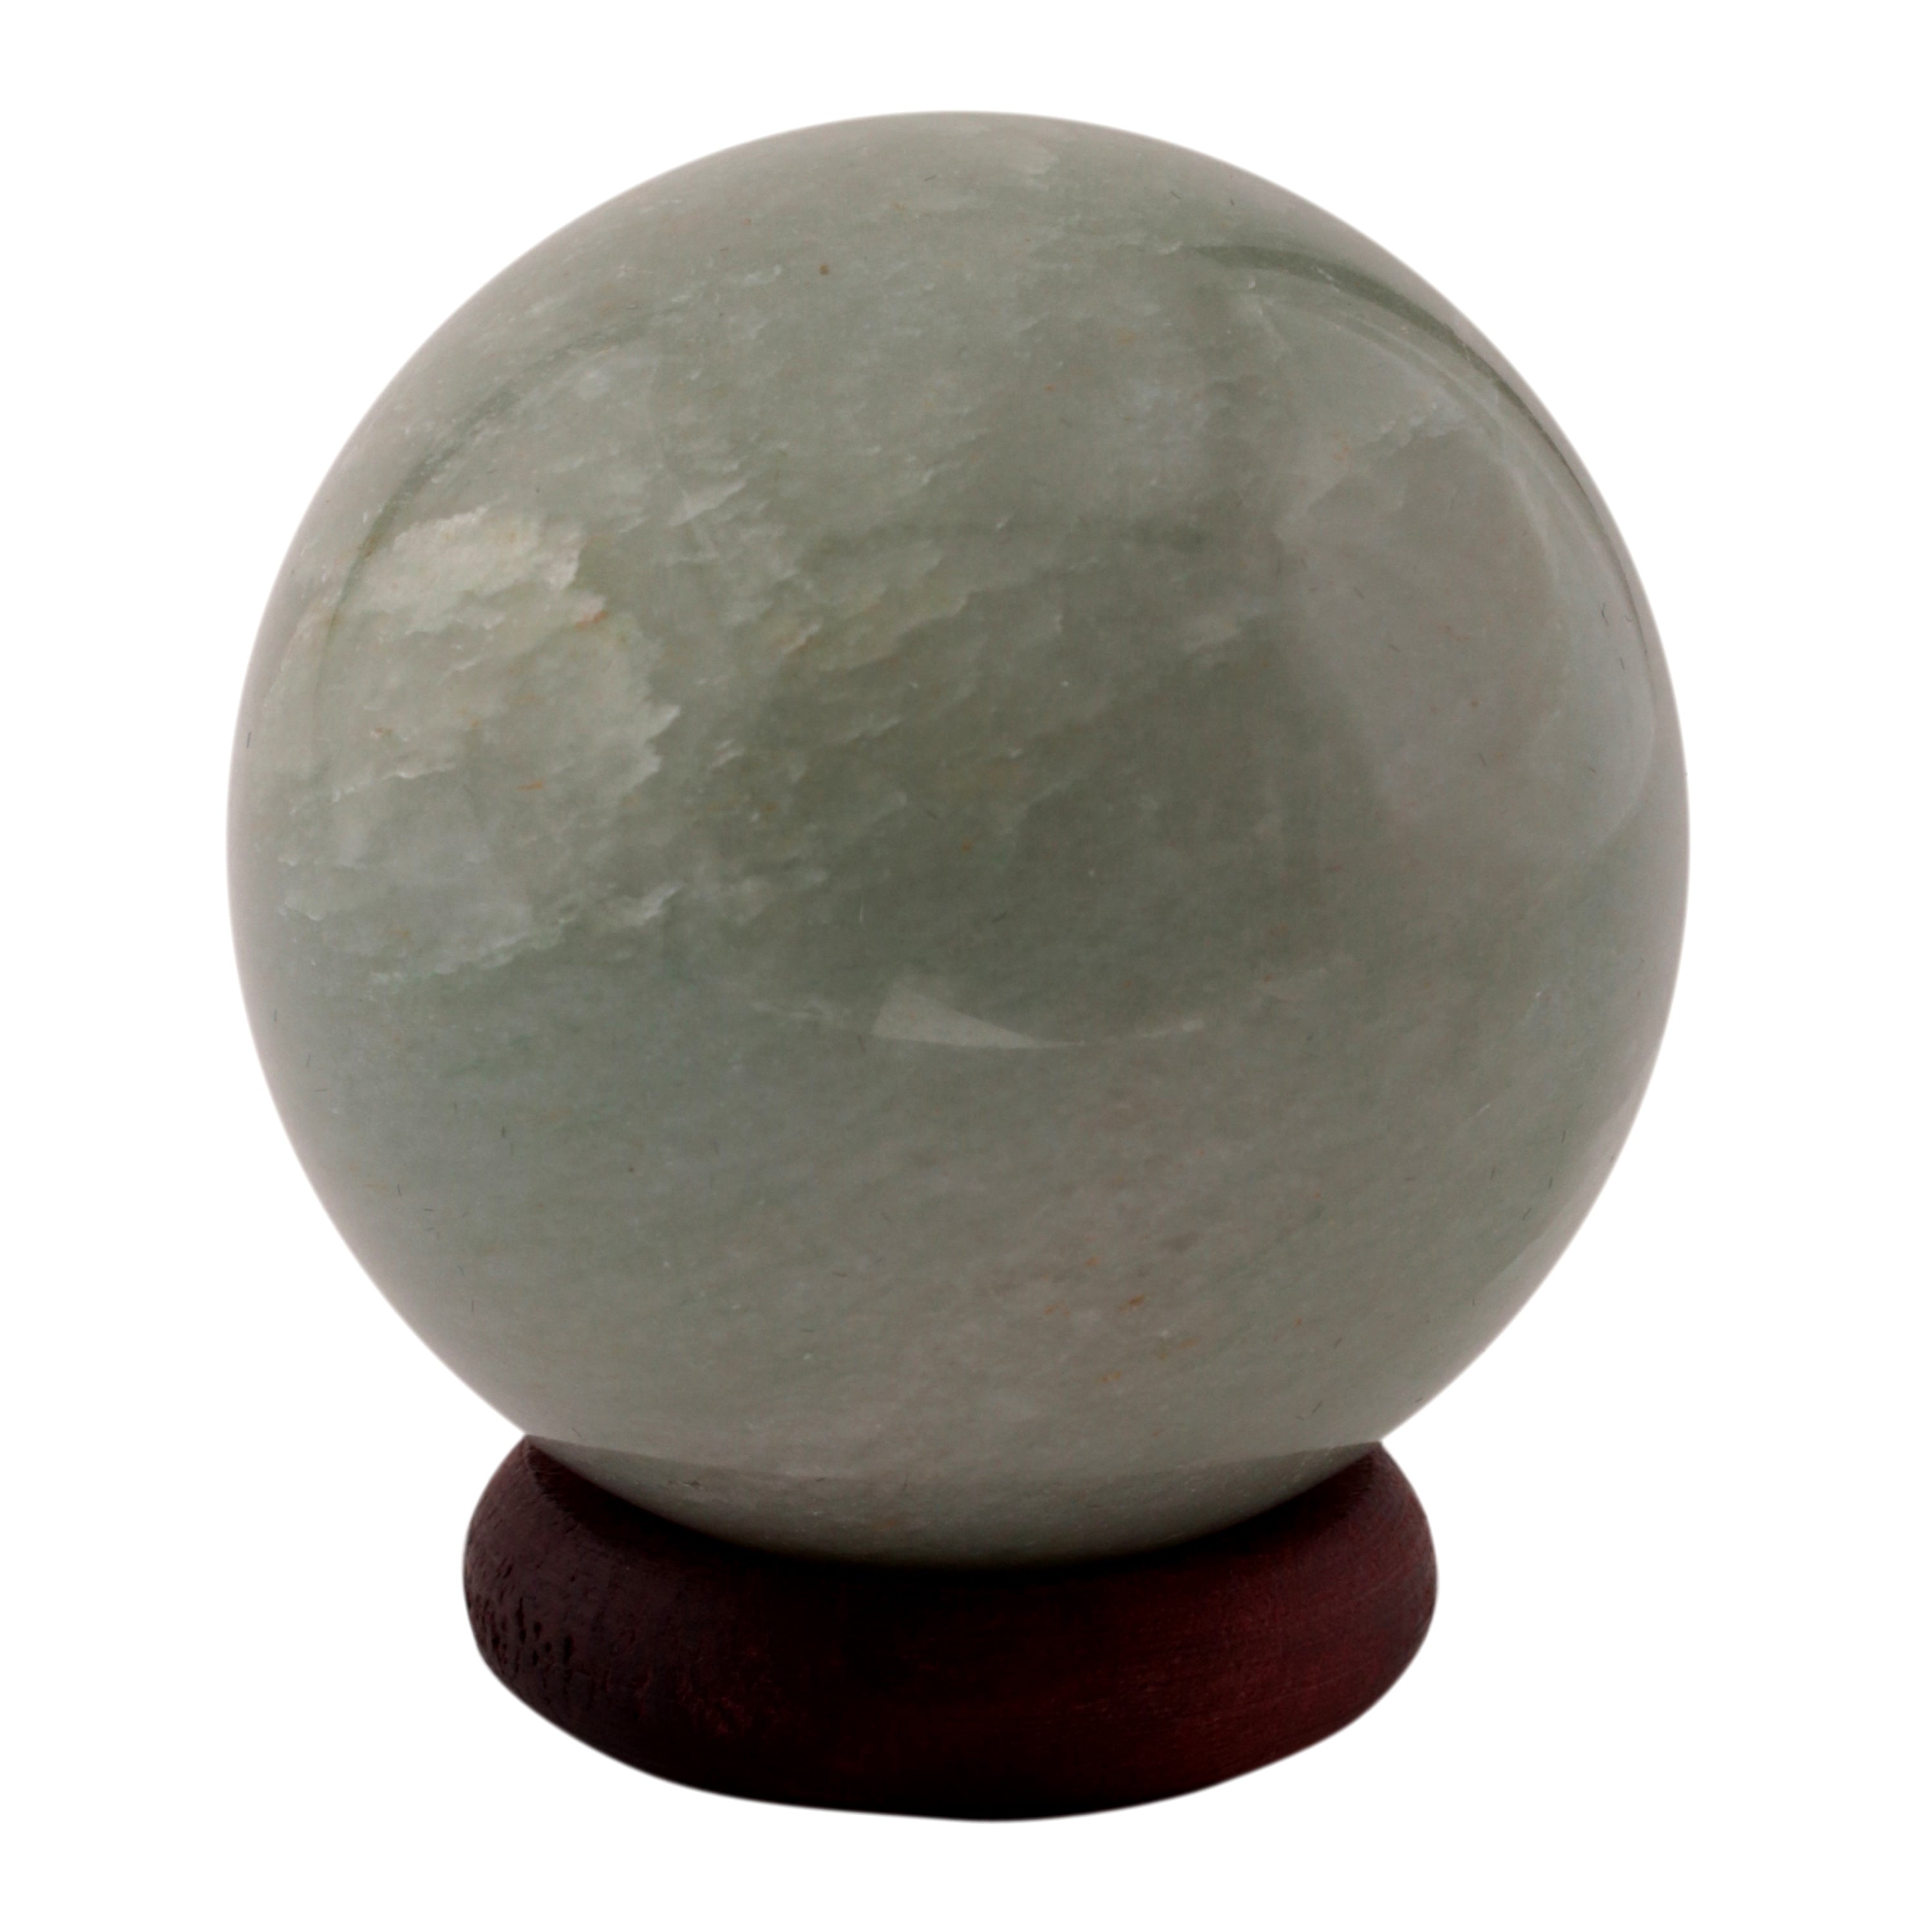 Healing Crystals - Green Aventurine Sphere 1 Kg Lot